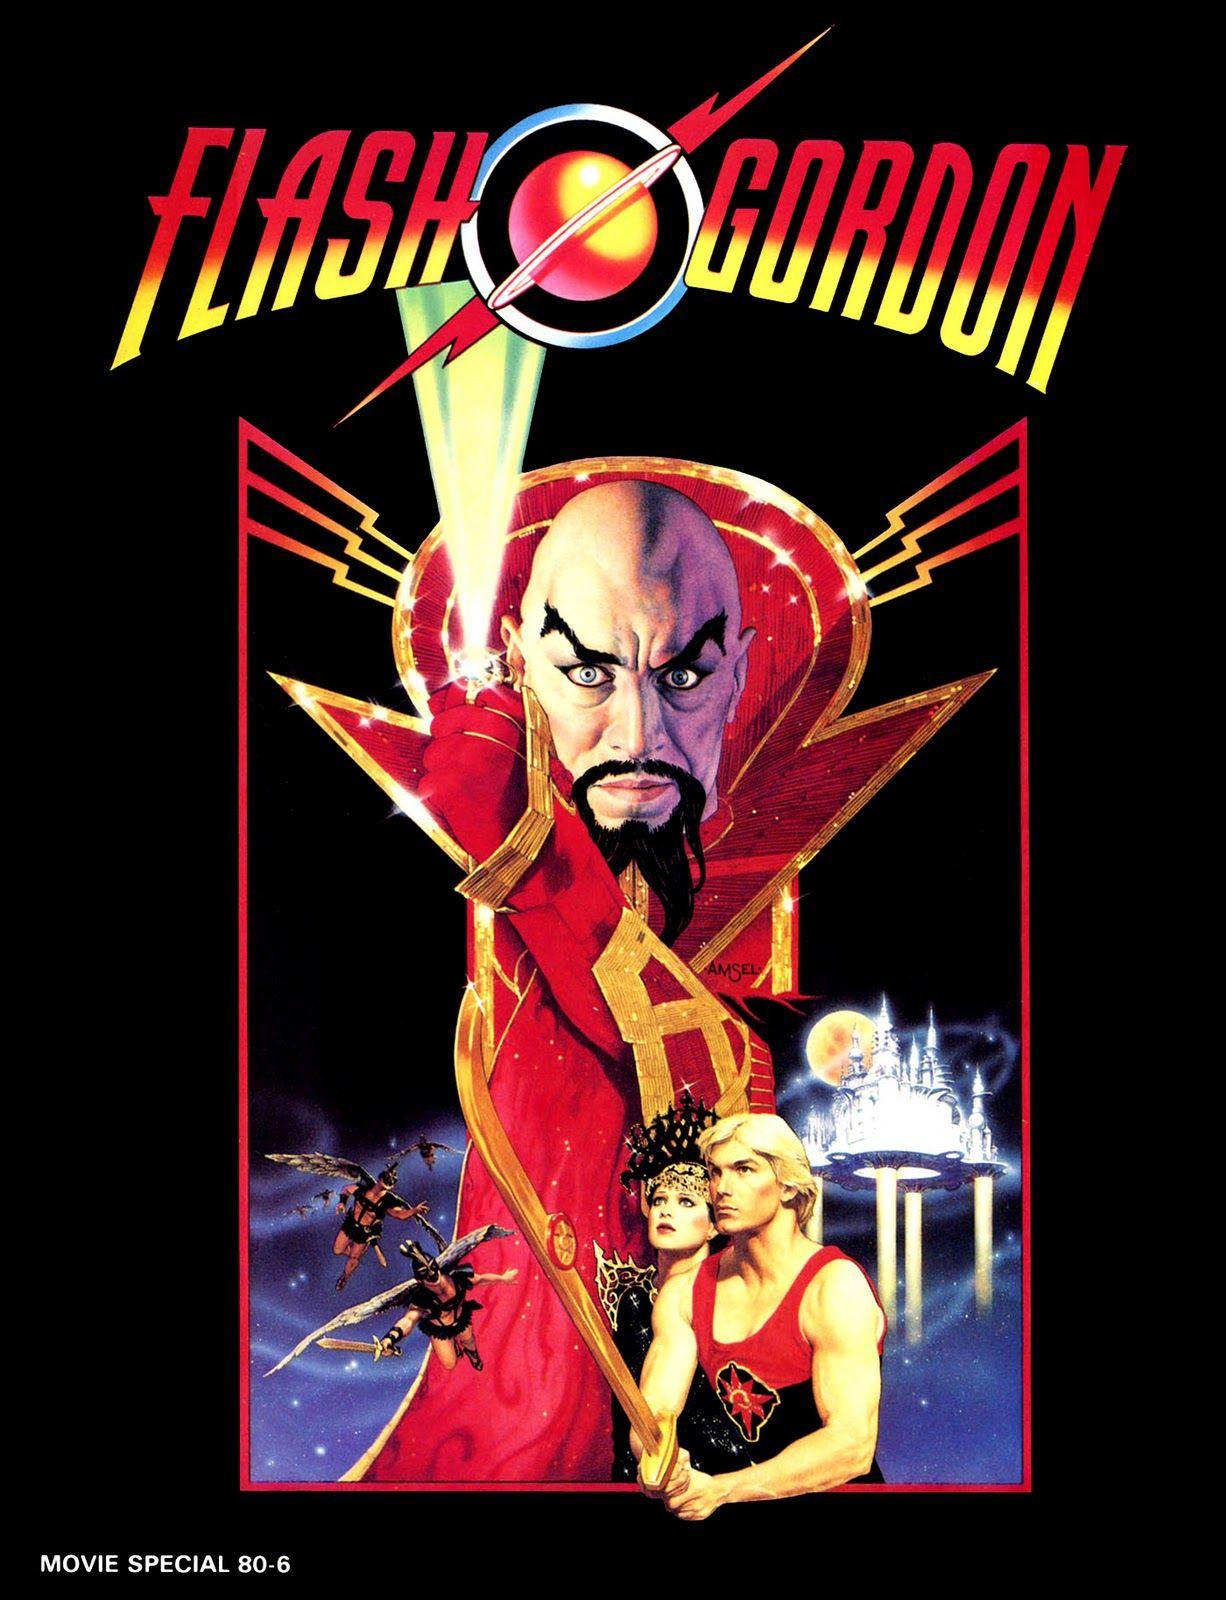 Flash Gordon Theme Song. Movie Theme Songs & TV Soundtracks